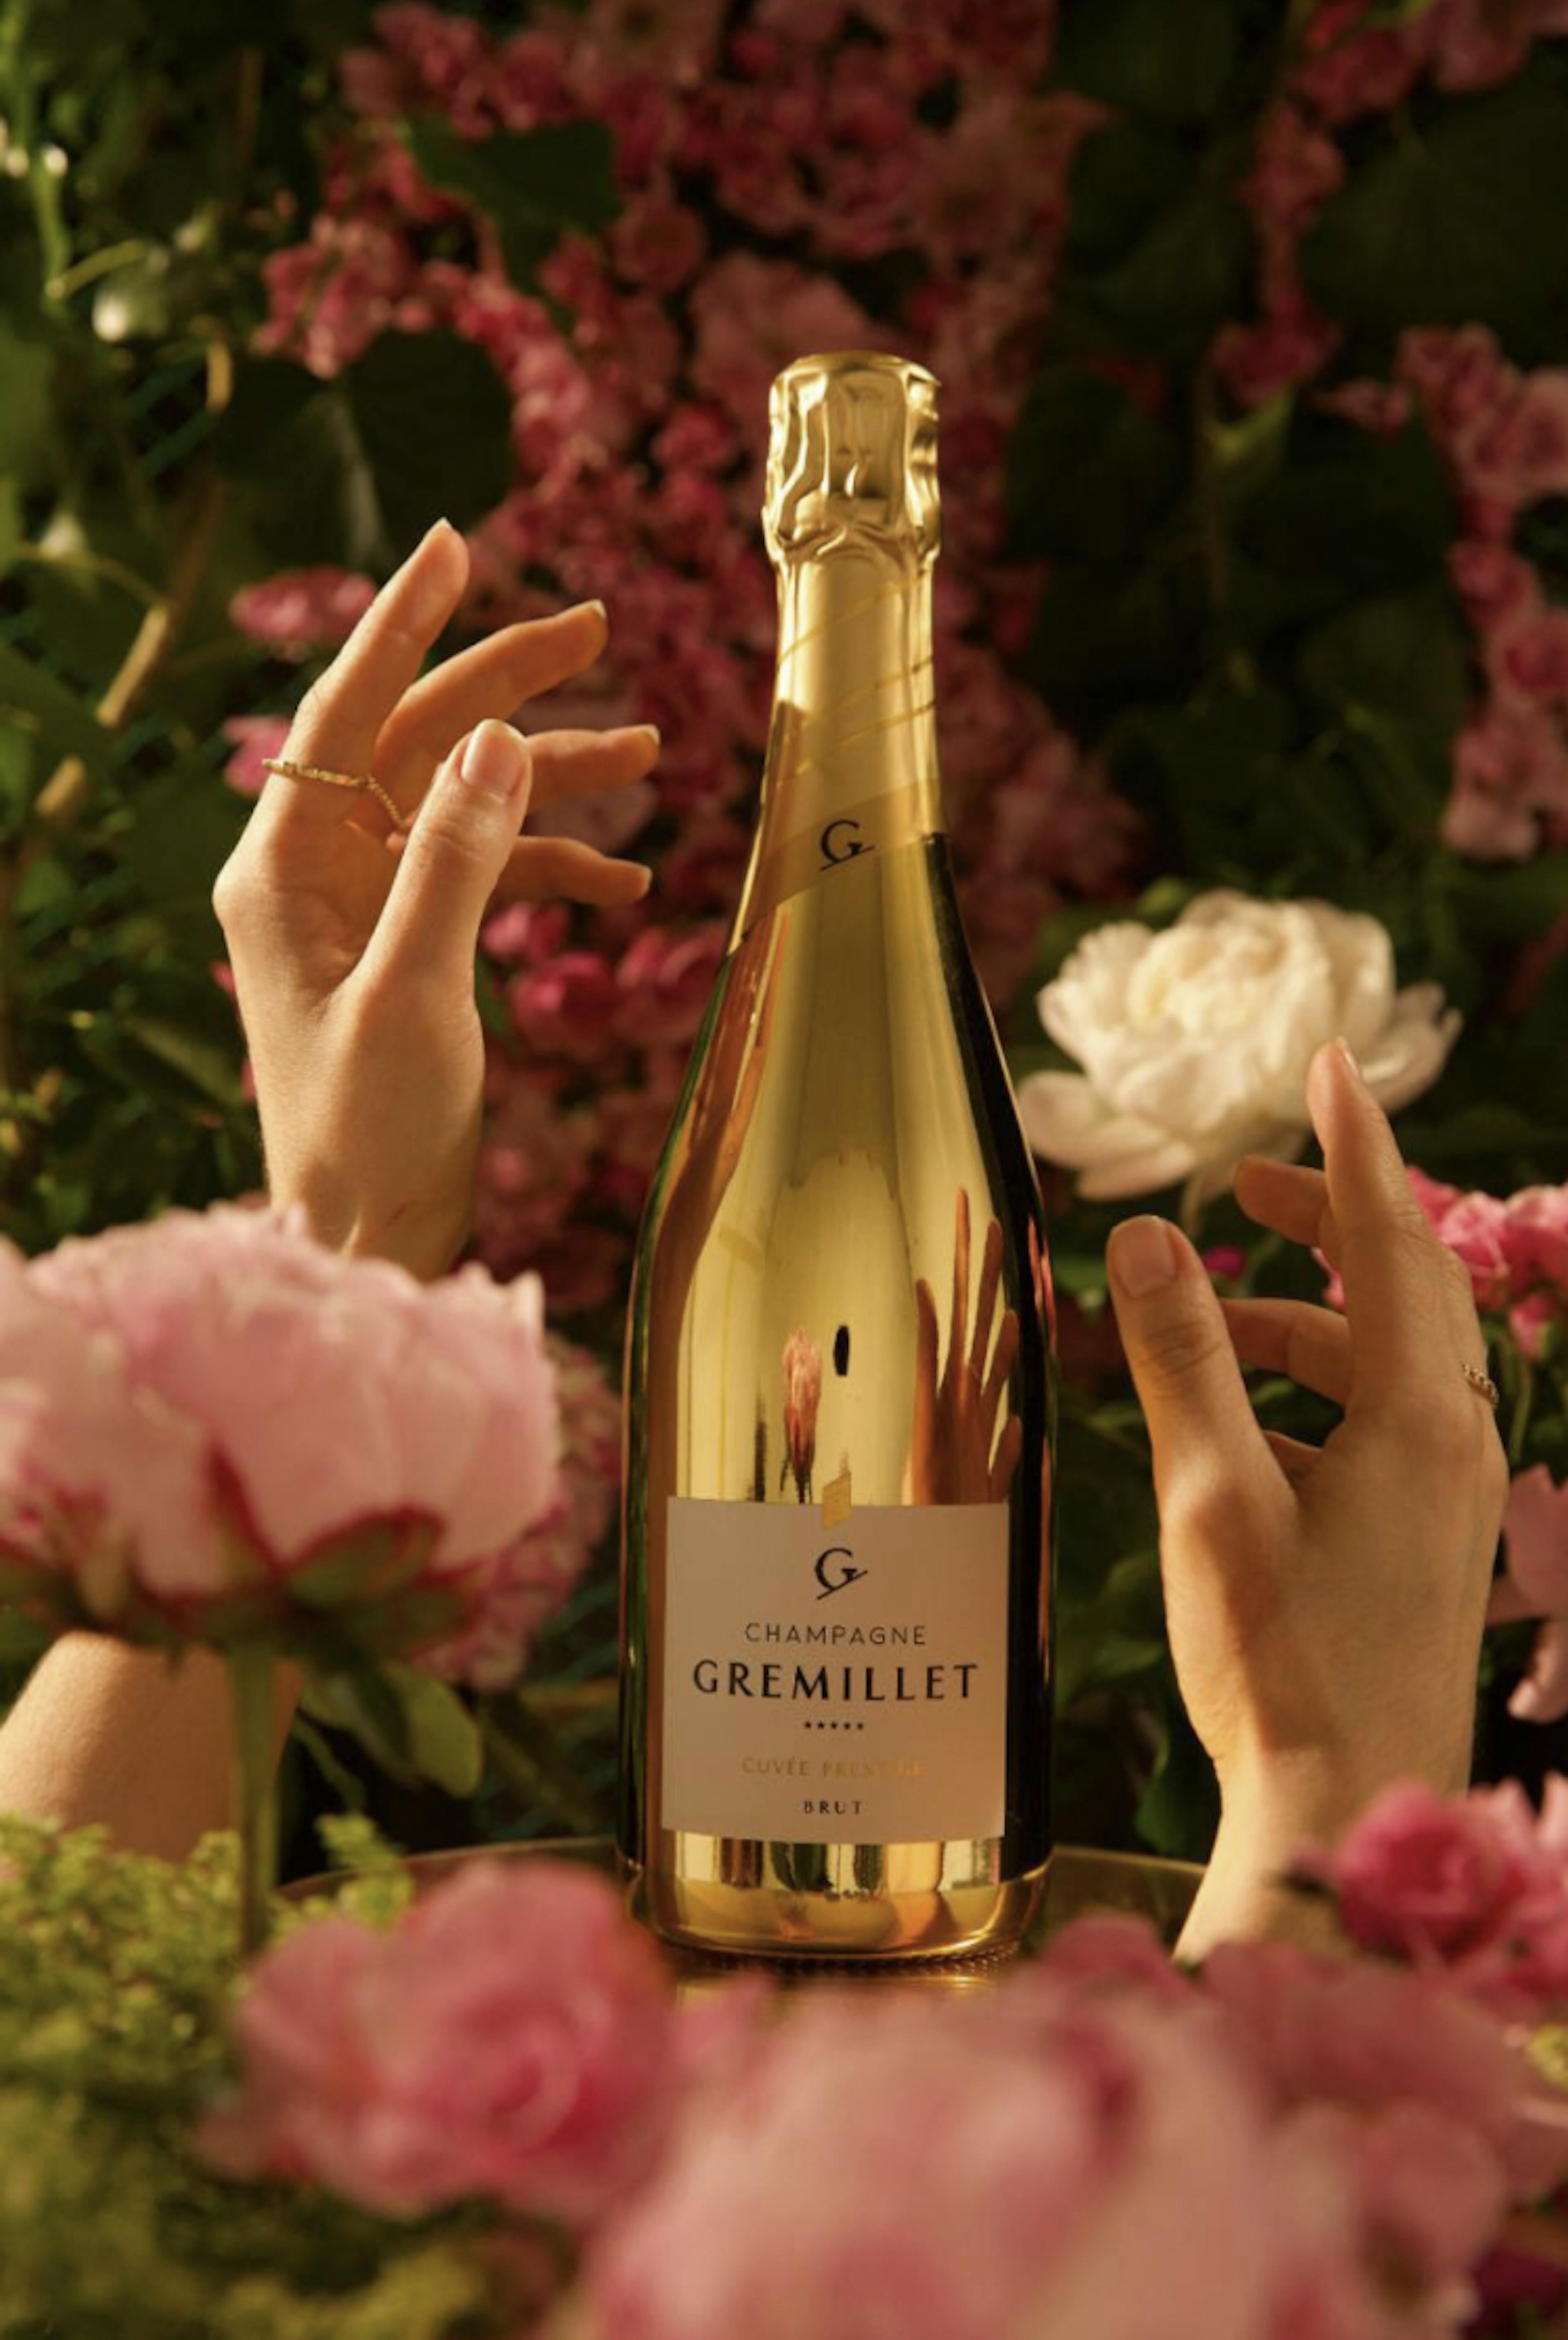 Hands reaching for golden bottle of wine